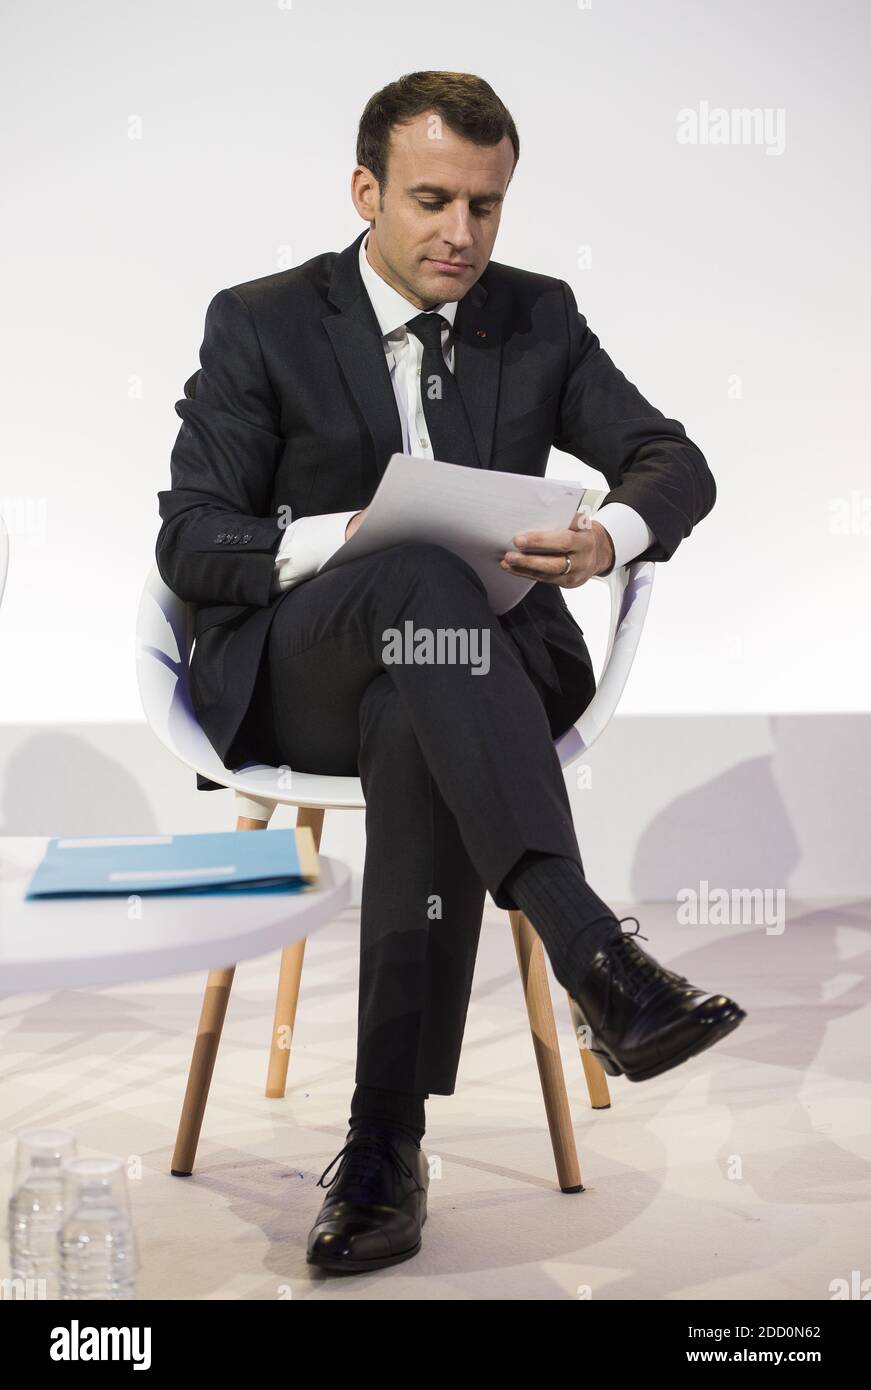 Der französische Präsident Emmanuel Macron liest und schreibt während der "Les assises de l'ecole maternelle" am 27. märz 2018 im "Conservatoire national des Arts et métiers" (CNAM) in Paris. Foto von ELIOT BLONDT/ABACAPRESS.COM Stockfoto